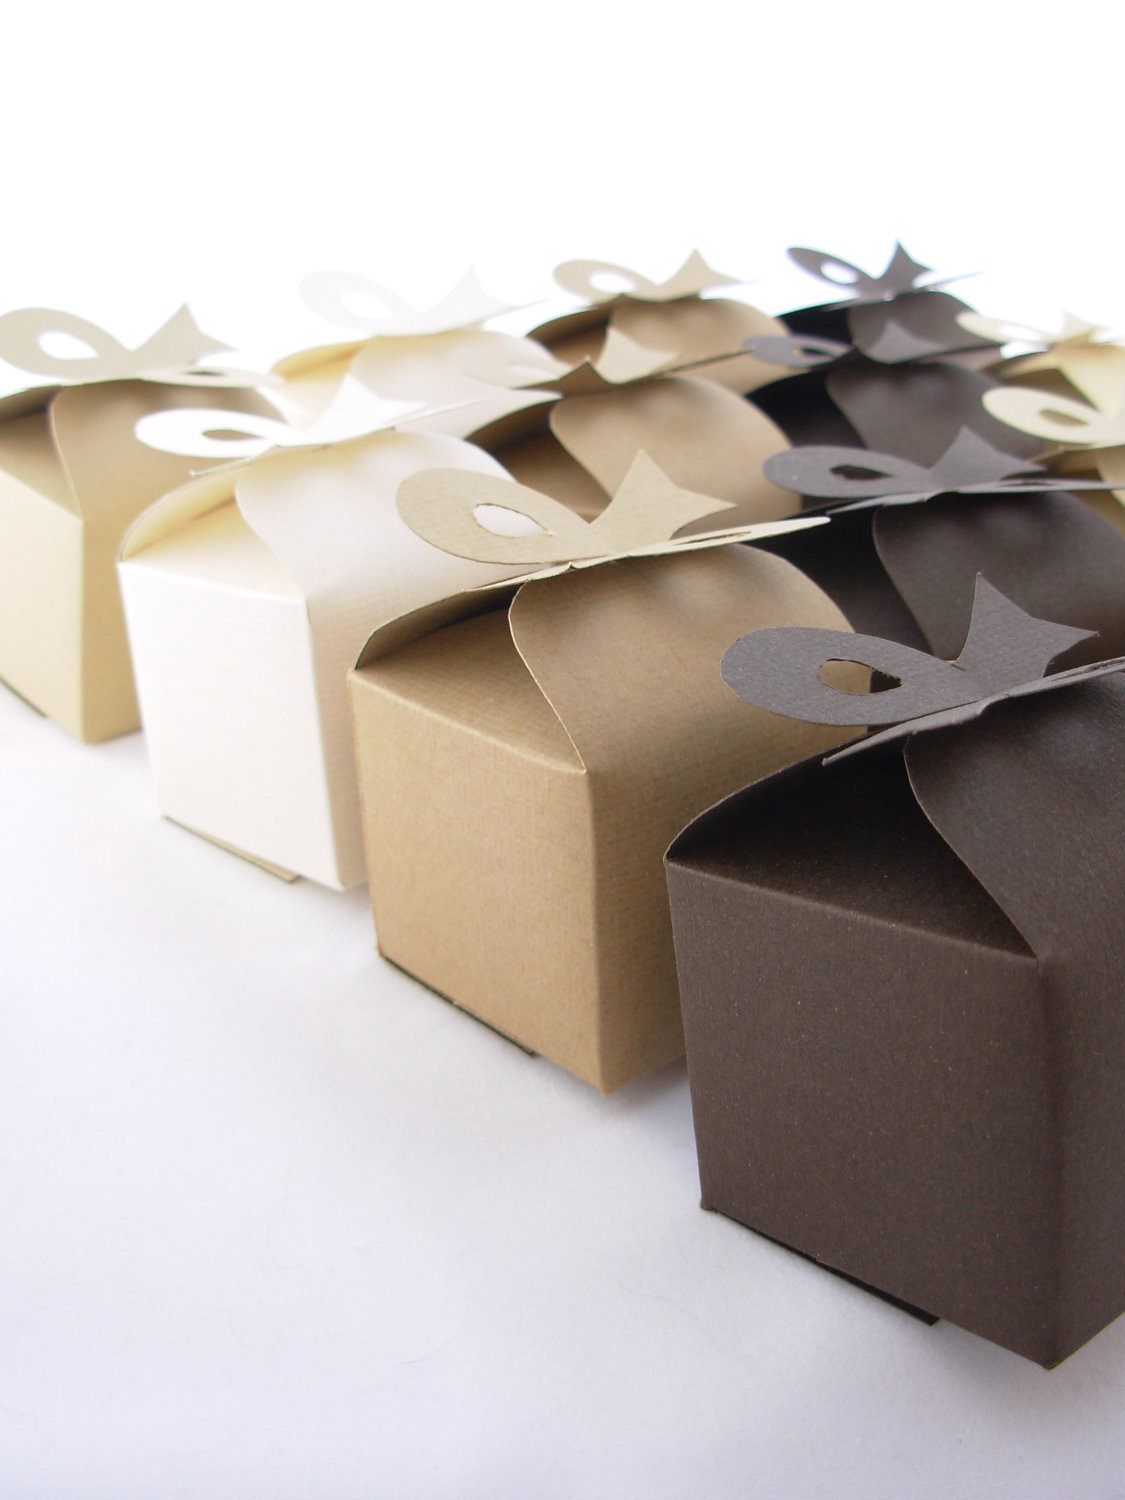 Best ideas about DIY Favor Box
. Save or Pin DIY Wedding Favor Bon Bon Box Template by PaperAngelDesigns Now.